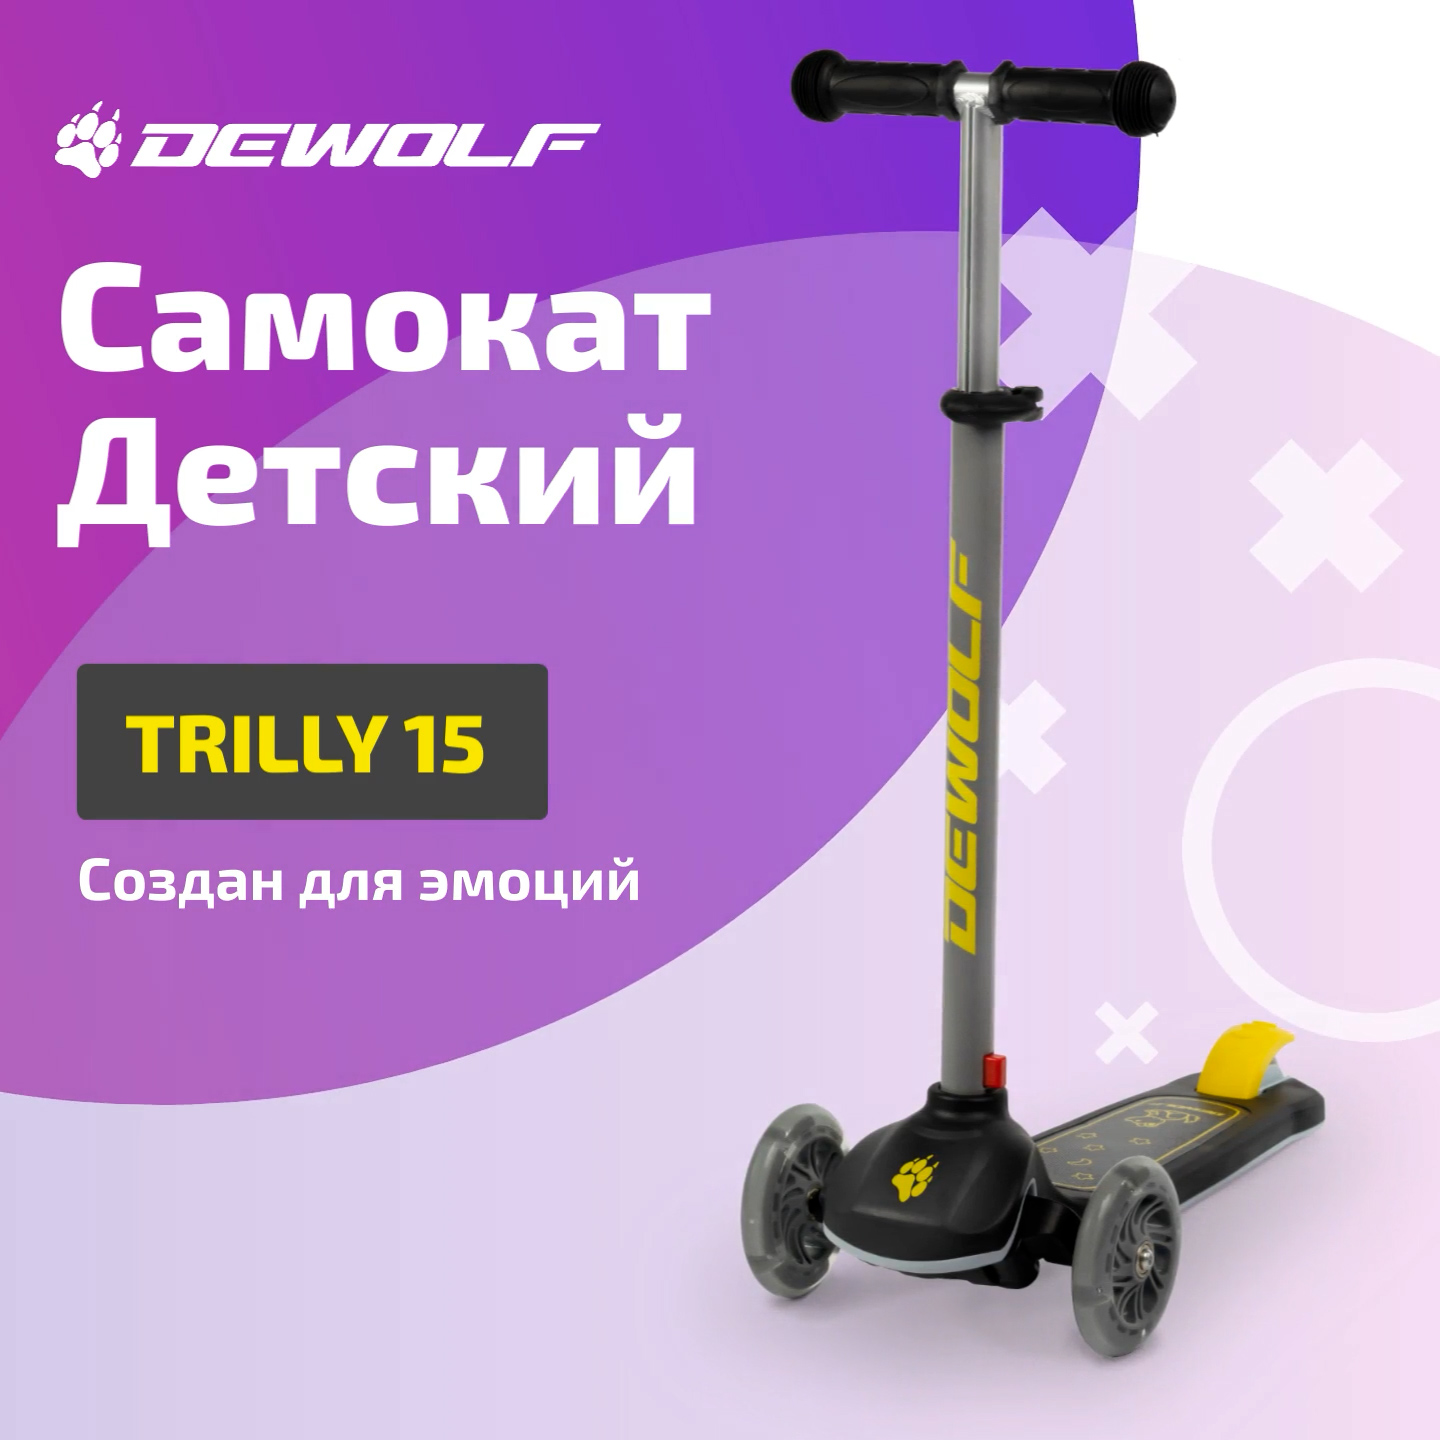 Dewolf TRILLY 15 Самокат детский, Black/yellow